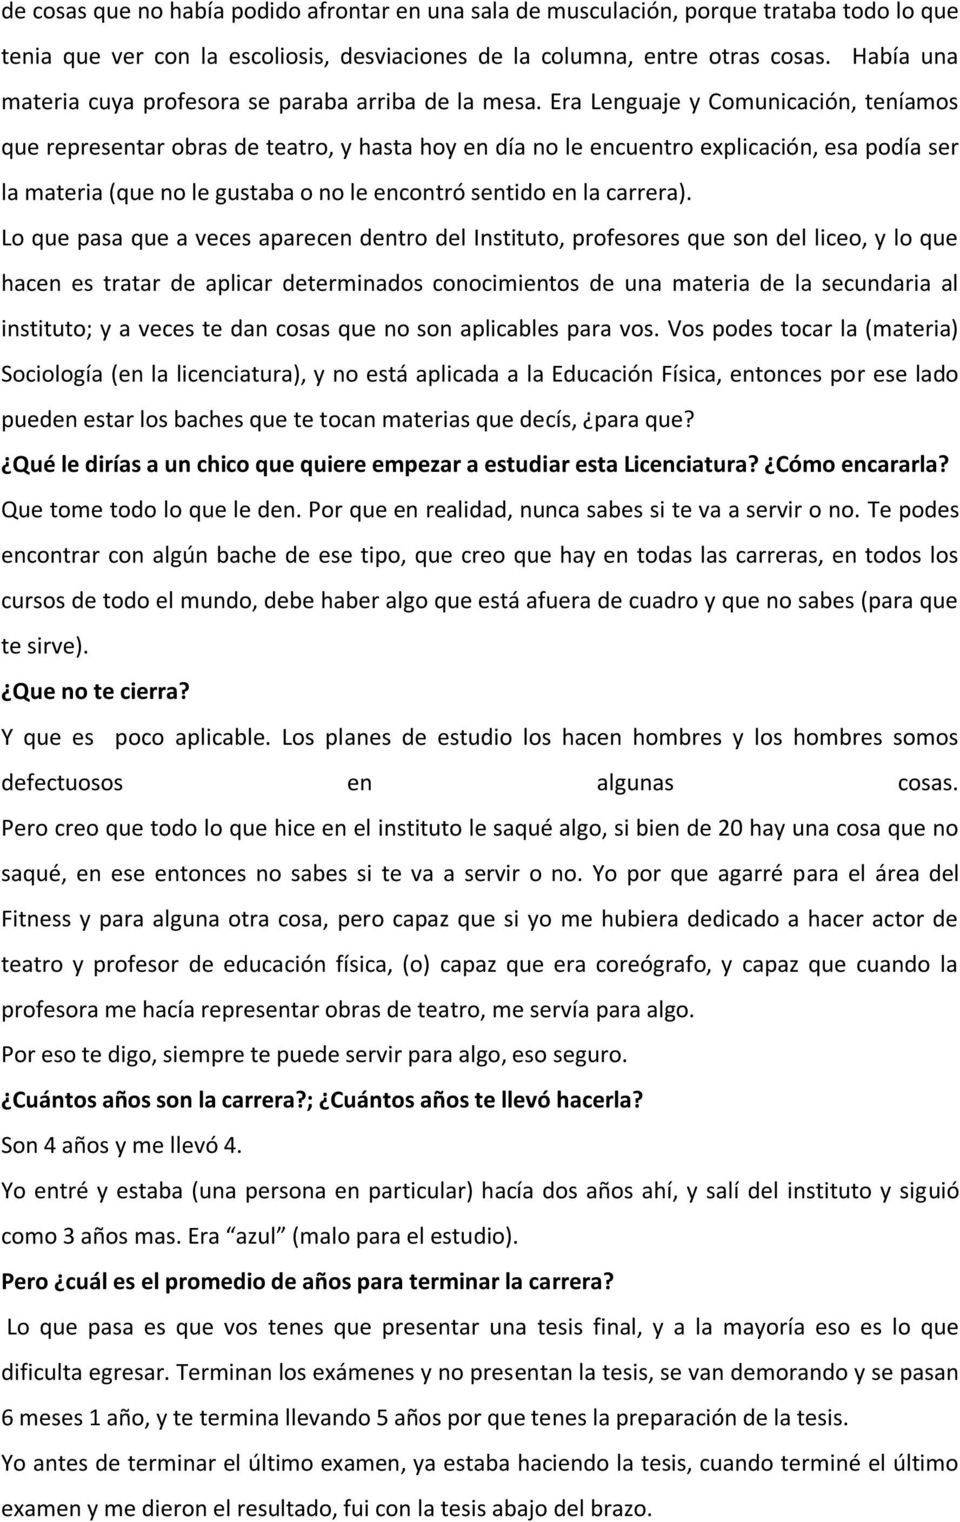 ENTREVISTA A PROFESOR DE EDUCACIÓN FÍSICA - PDF Free Download